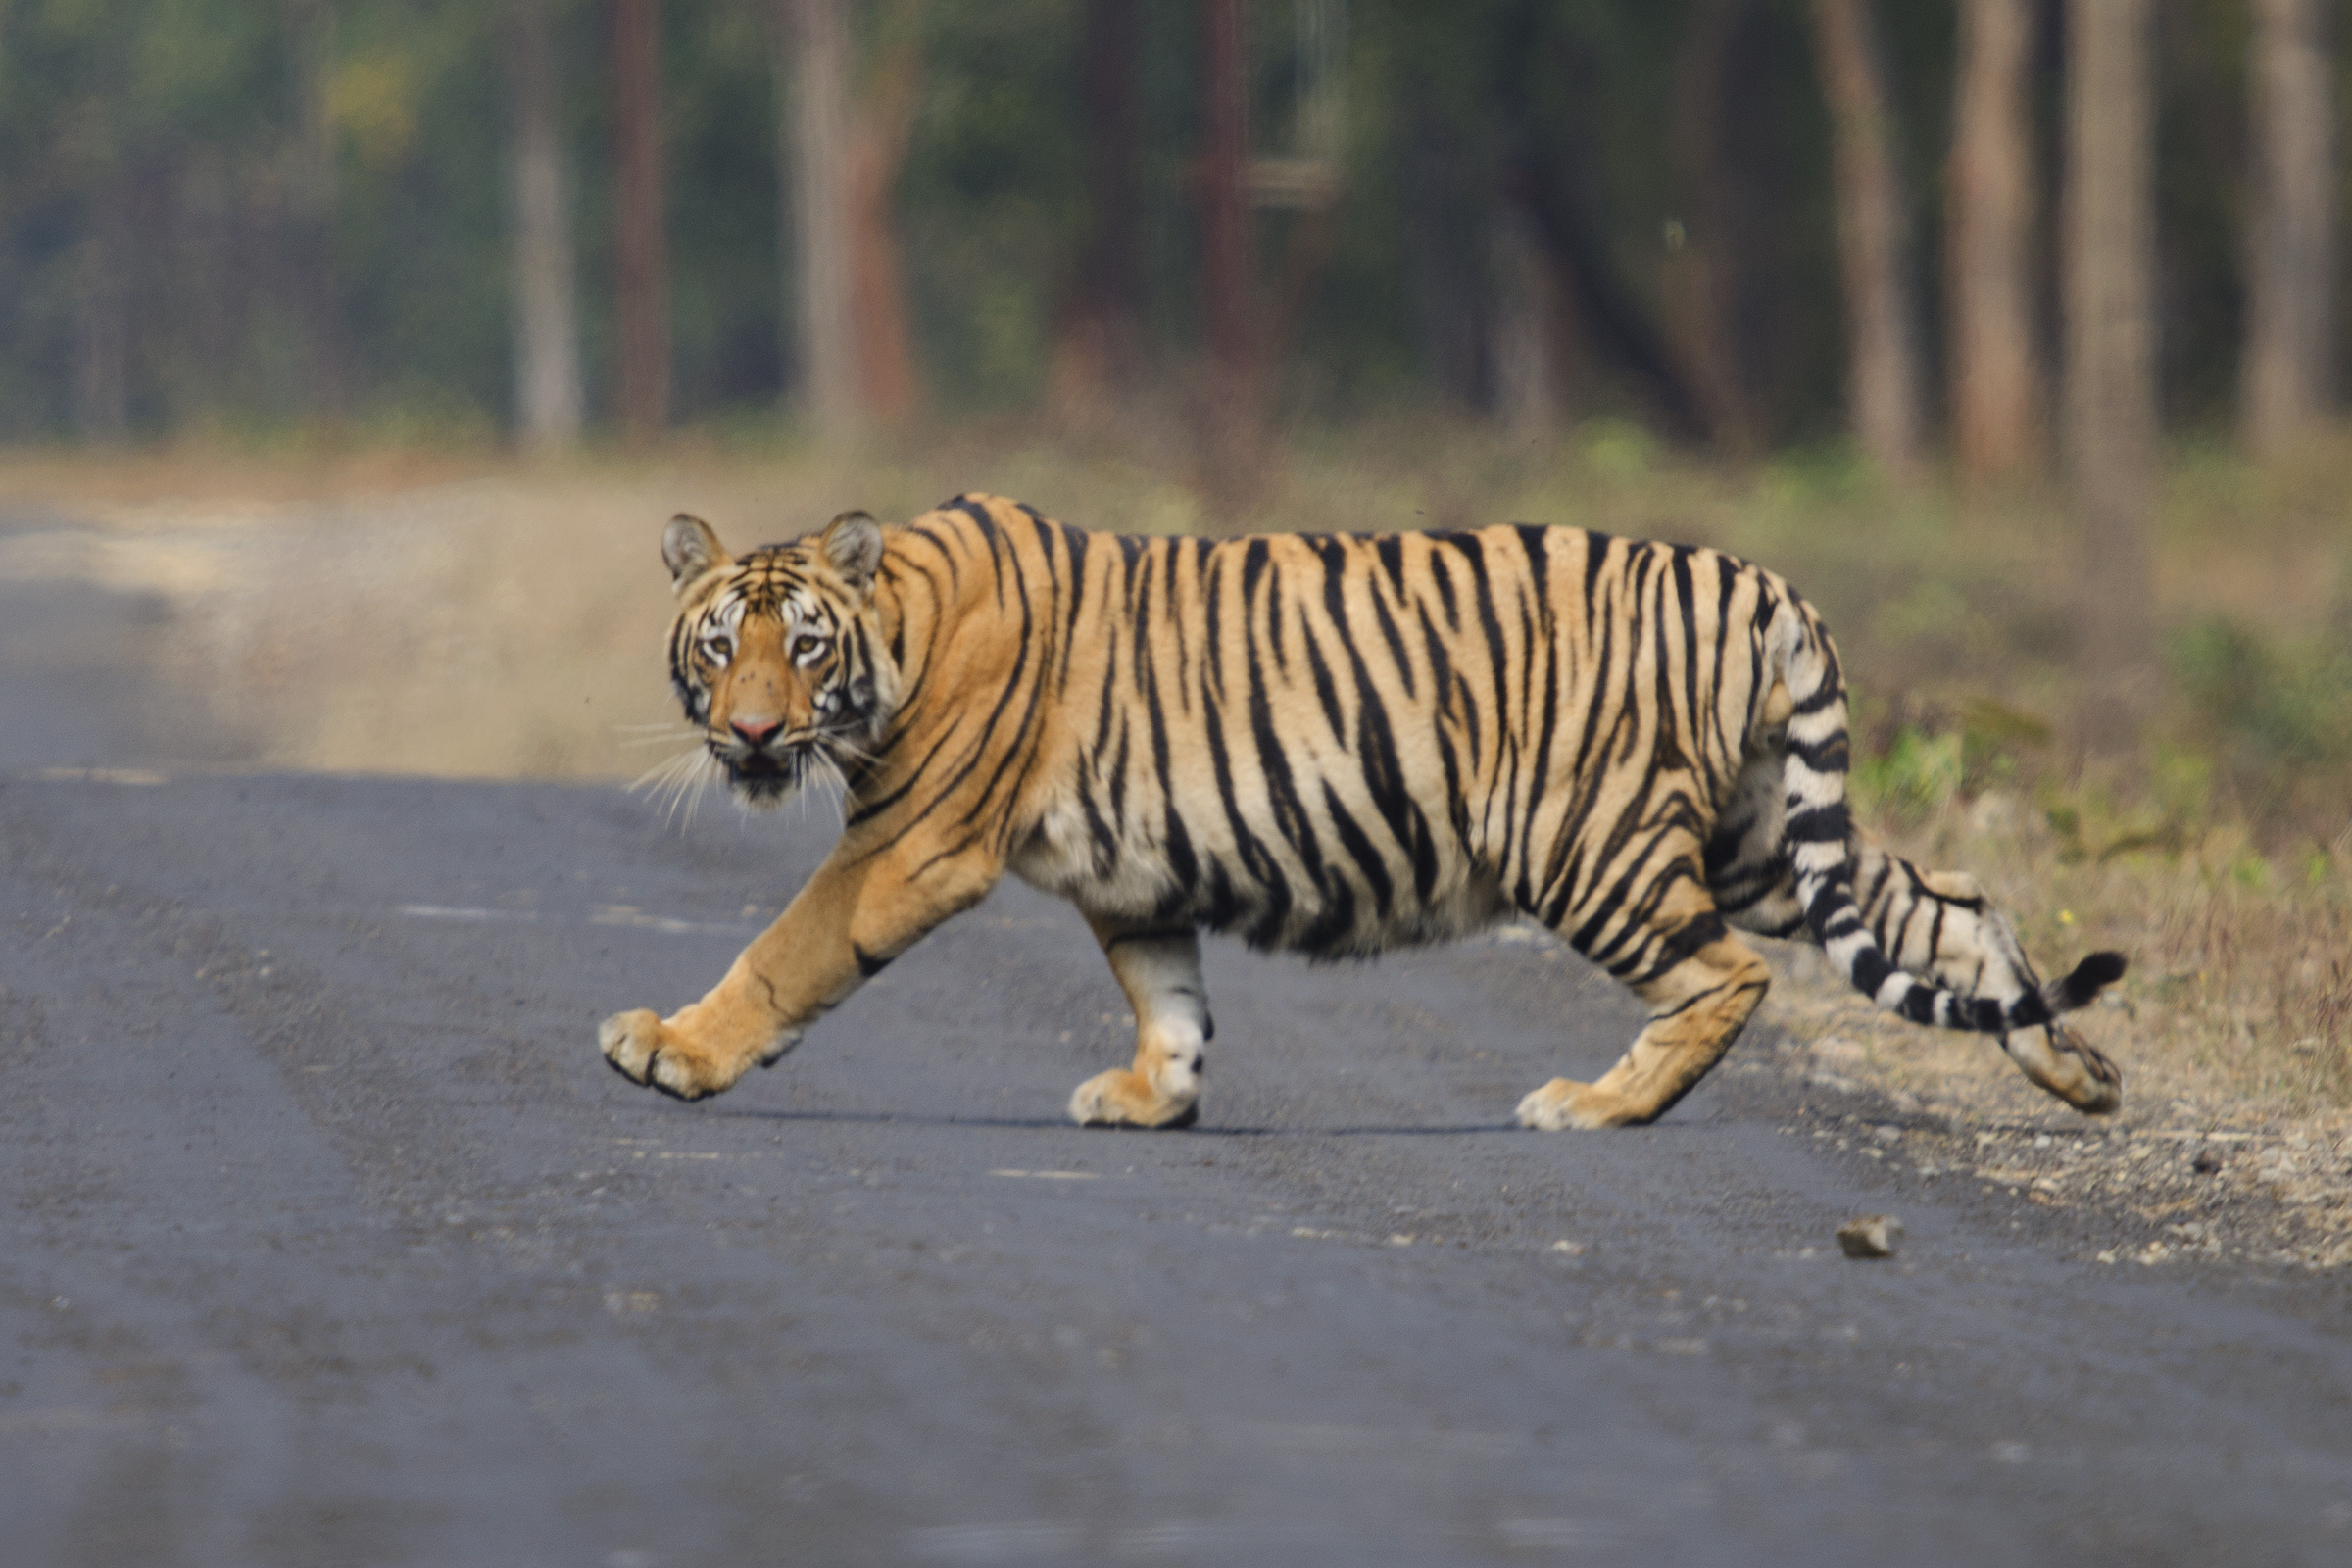 Uttar Pradesh To Axe 50,000 Trees In Tiger Habitat To Build A Road